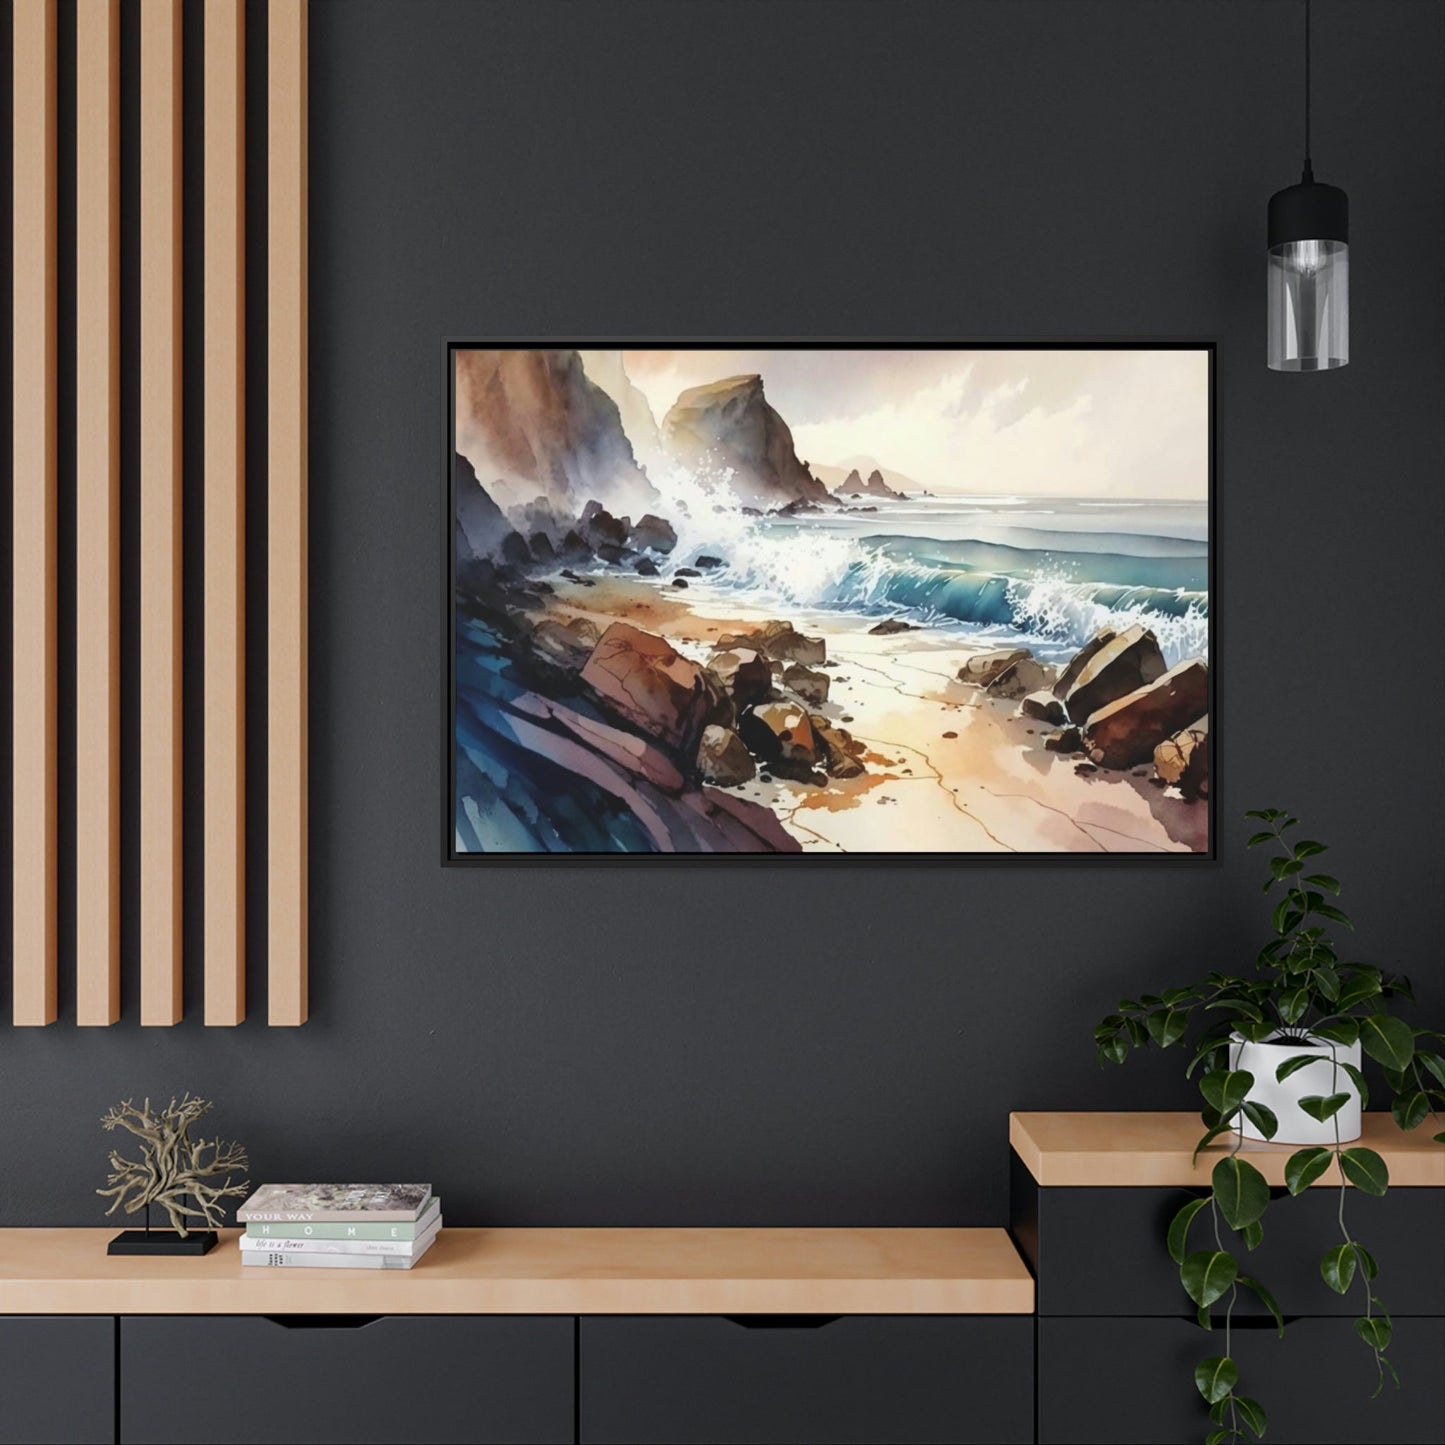 Coastal Serenity: Canvas & Poster Artwork of a Peaceful Beach Scene